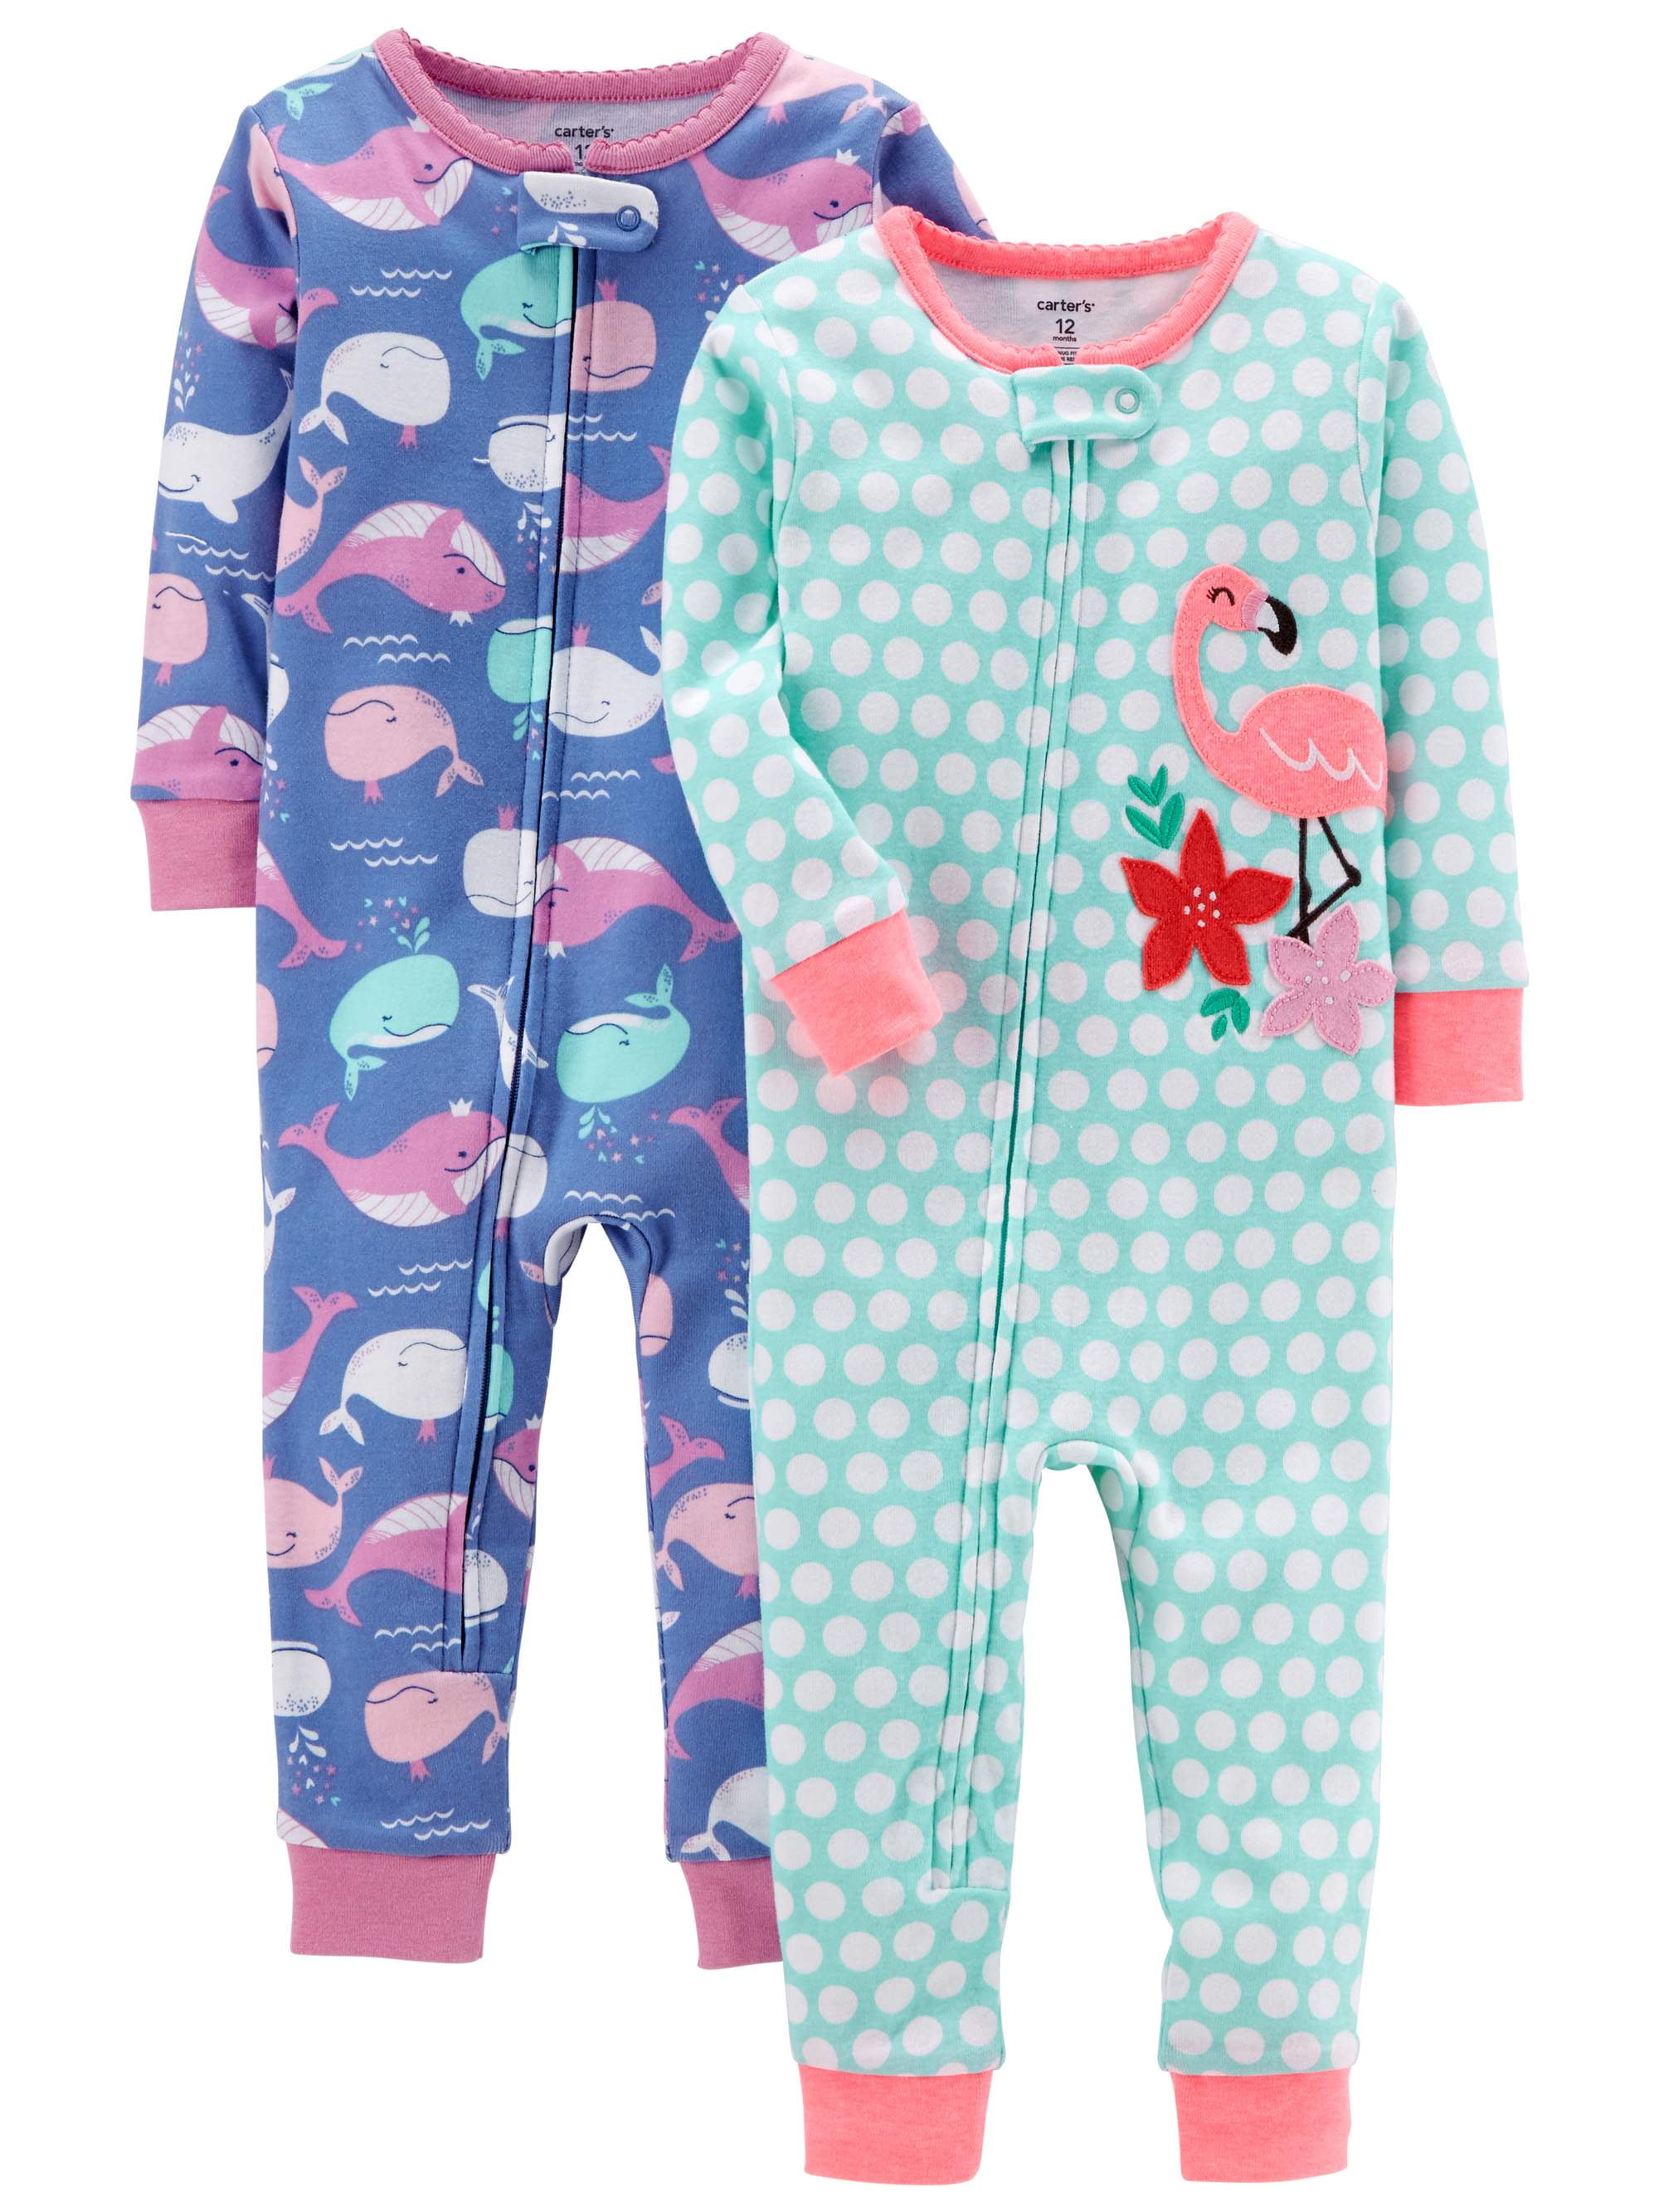 One-Piece Pajama Carter's Toddler Girls Cotton Footless Dinosaur Sleeper 